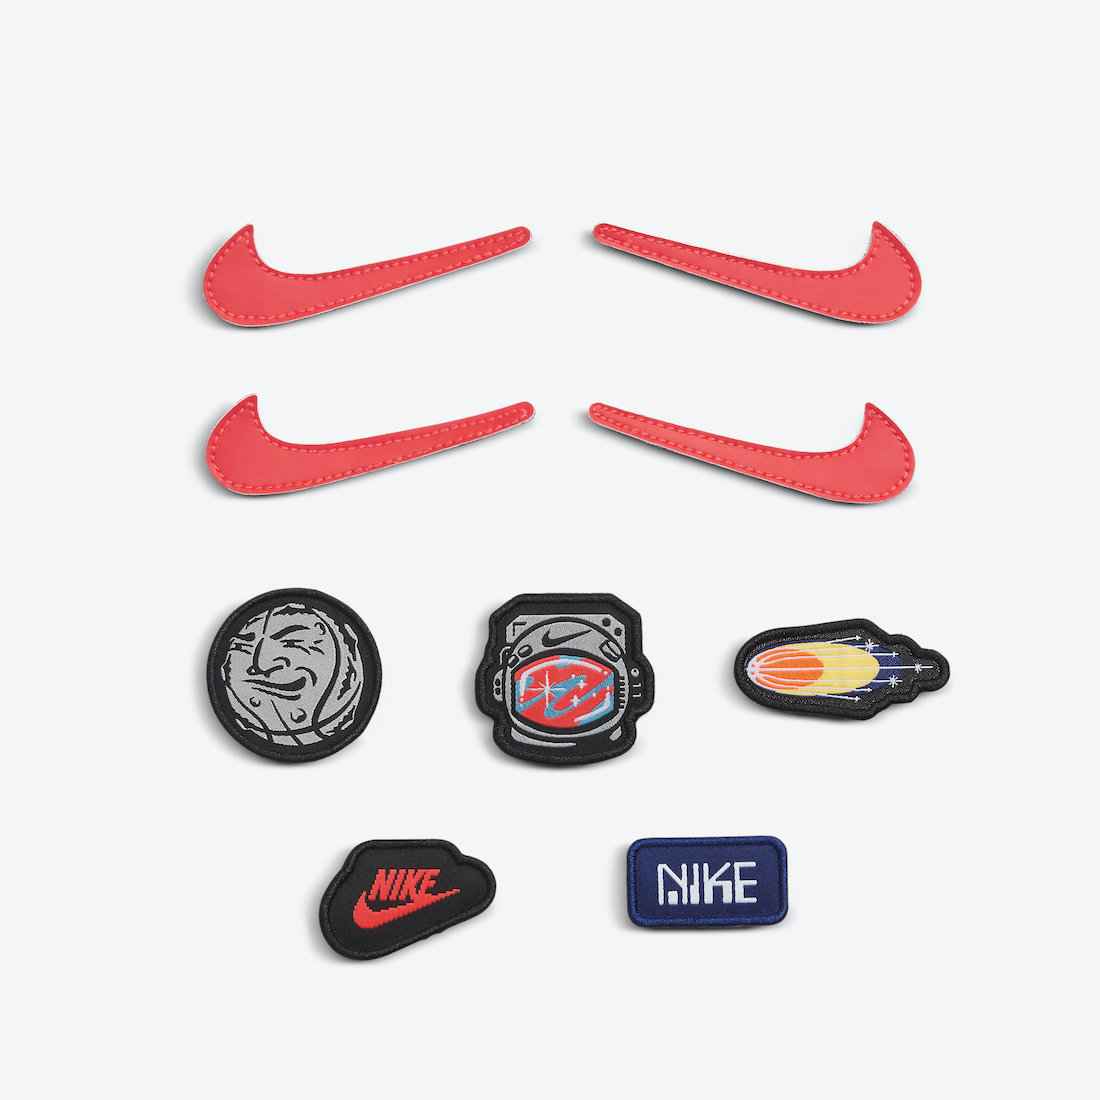 Nike Air Force 1 1 GS Black Bright Crimson DB1856-001 Release Date